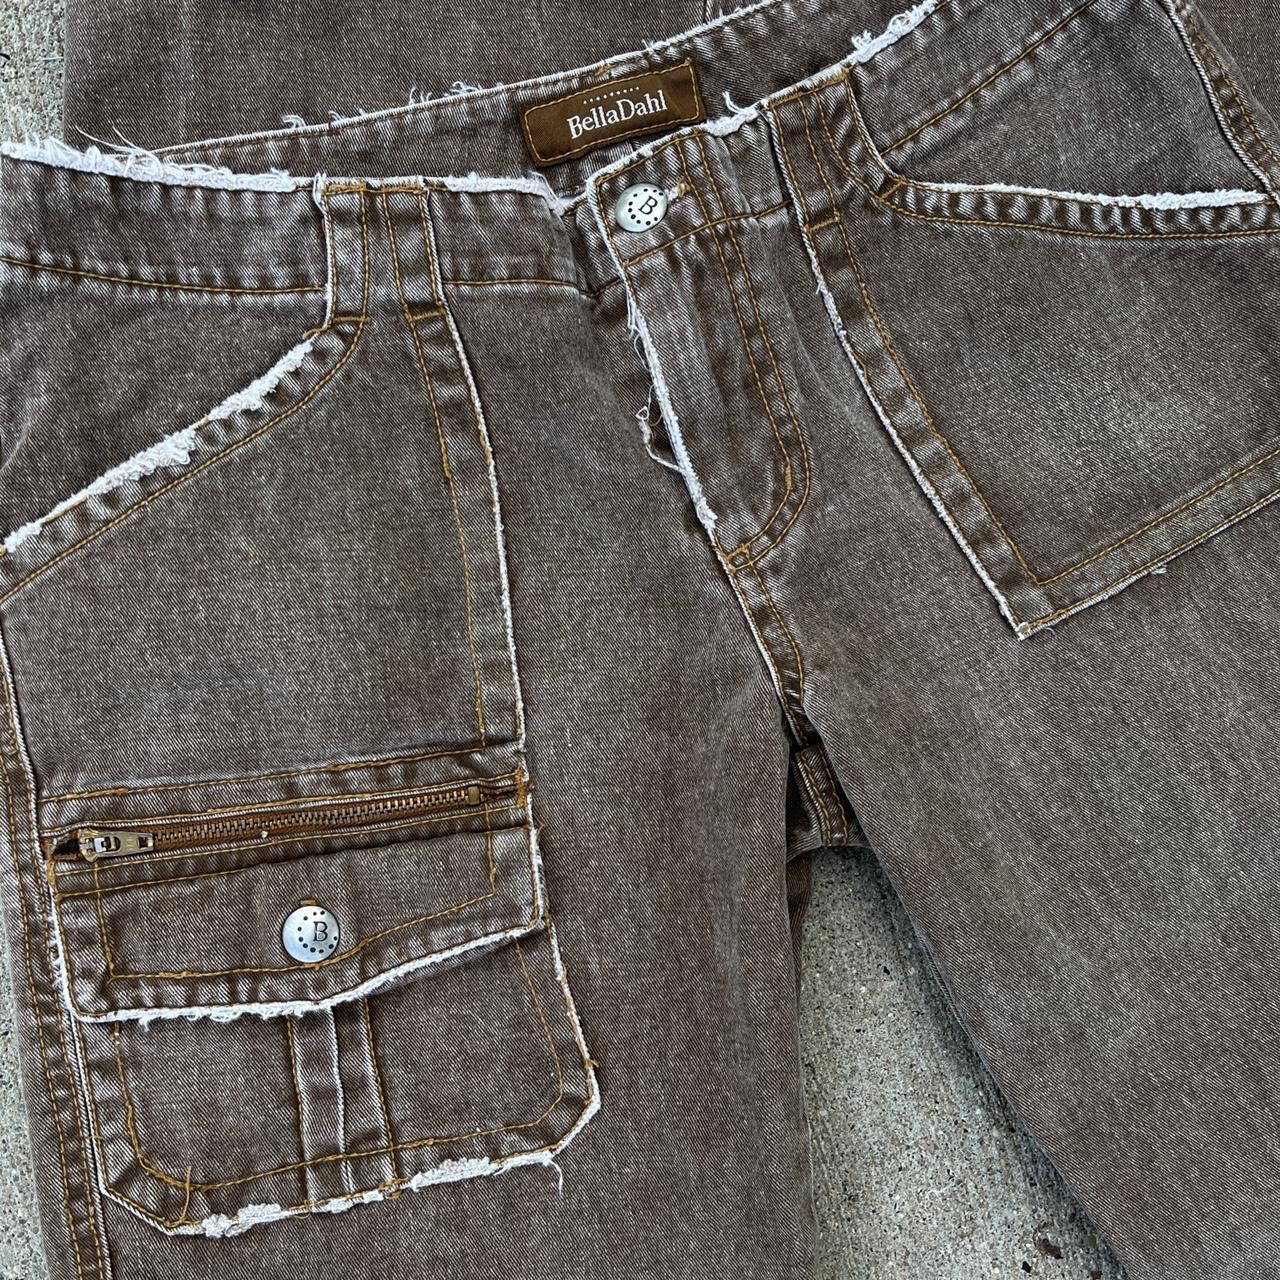 Product Image 3 - Brown Flared Pants

•Women’s Vintage BellaDahl